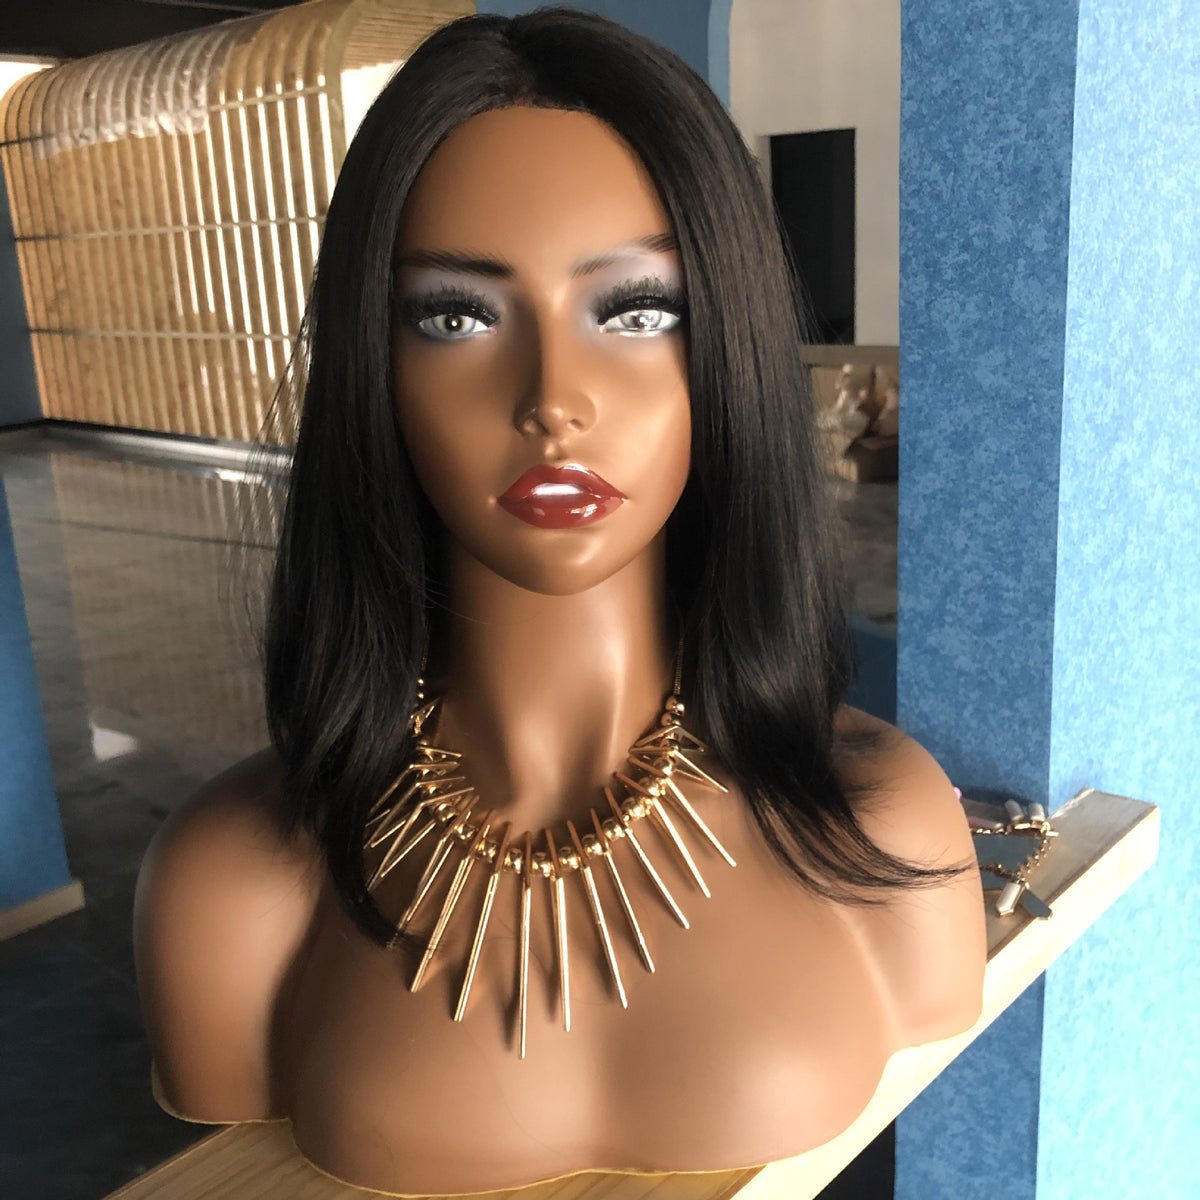 Mannequin Head Women Black Skin Shoulder Body Half Photography Display